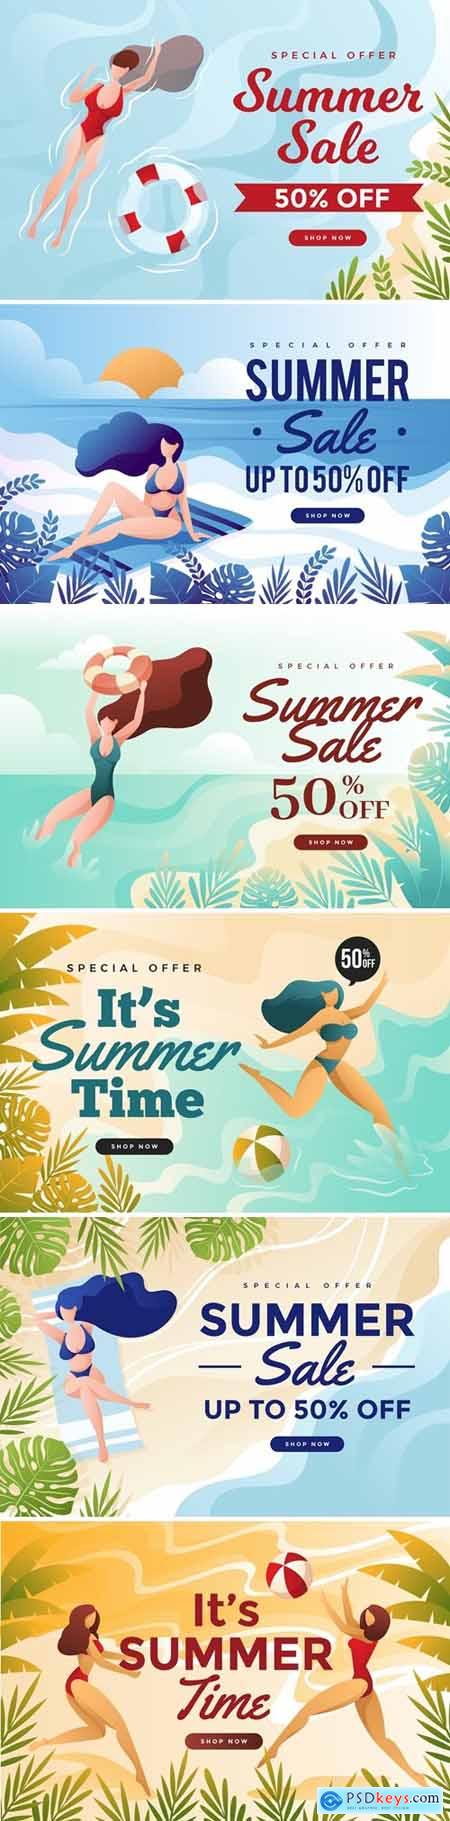 Summer Holiday Sale Vector Illustration Banner